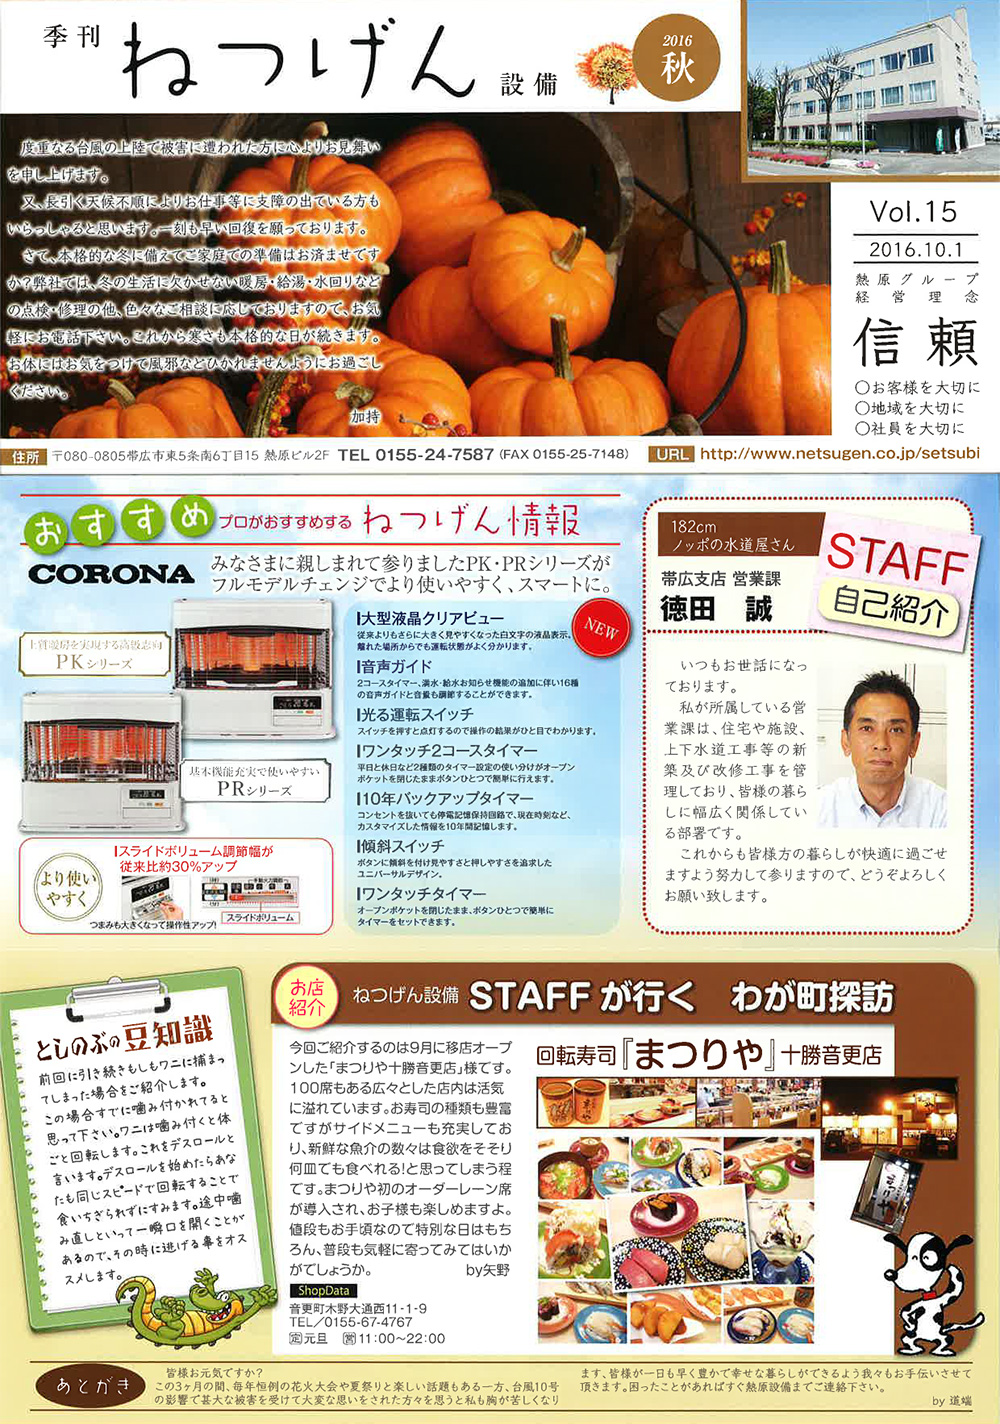 http://www.netsugen.co.jp/setsubi/information/images/161001kikan.jpg